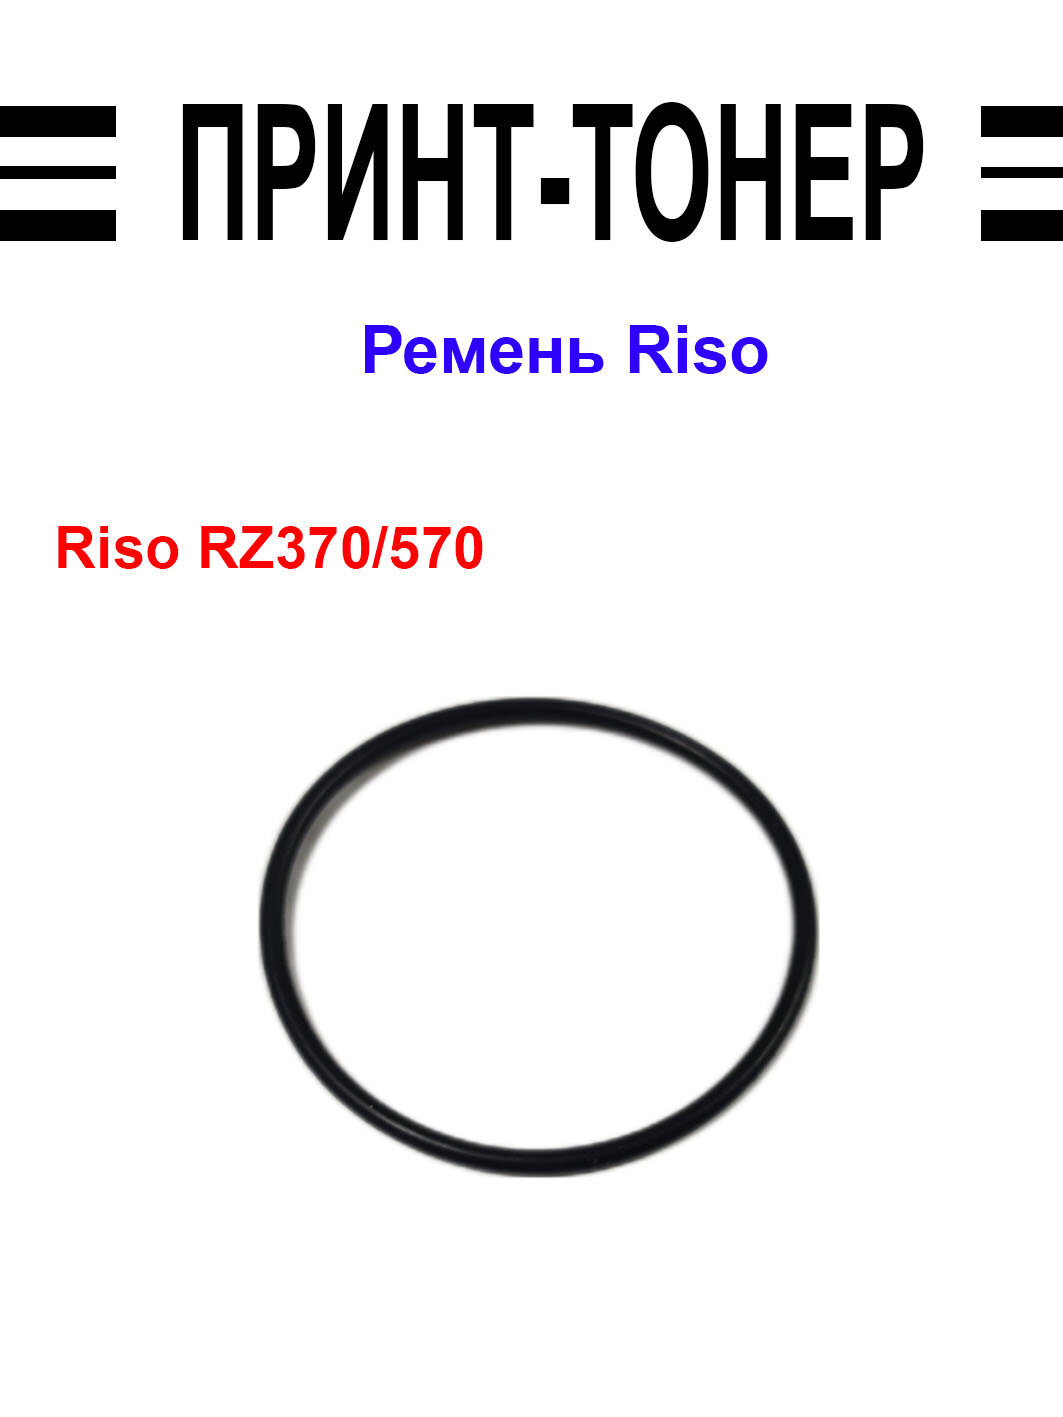 628-21401-009 Ремень Riso RZ370/570